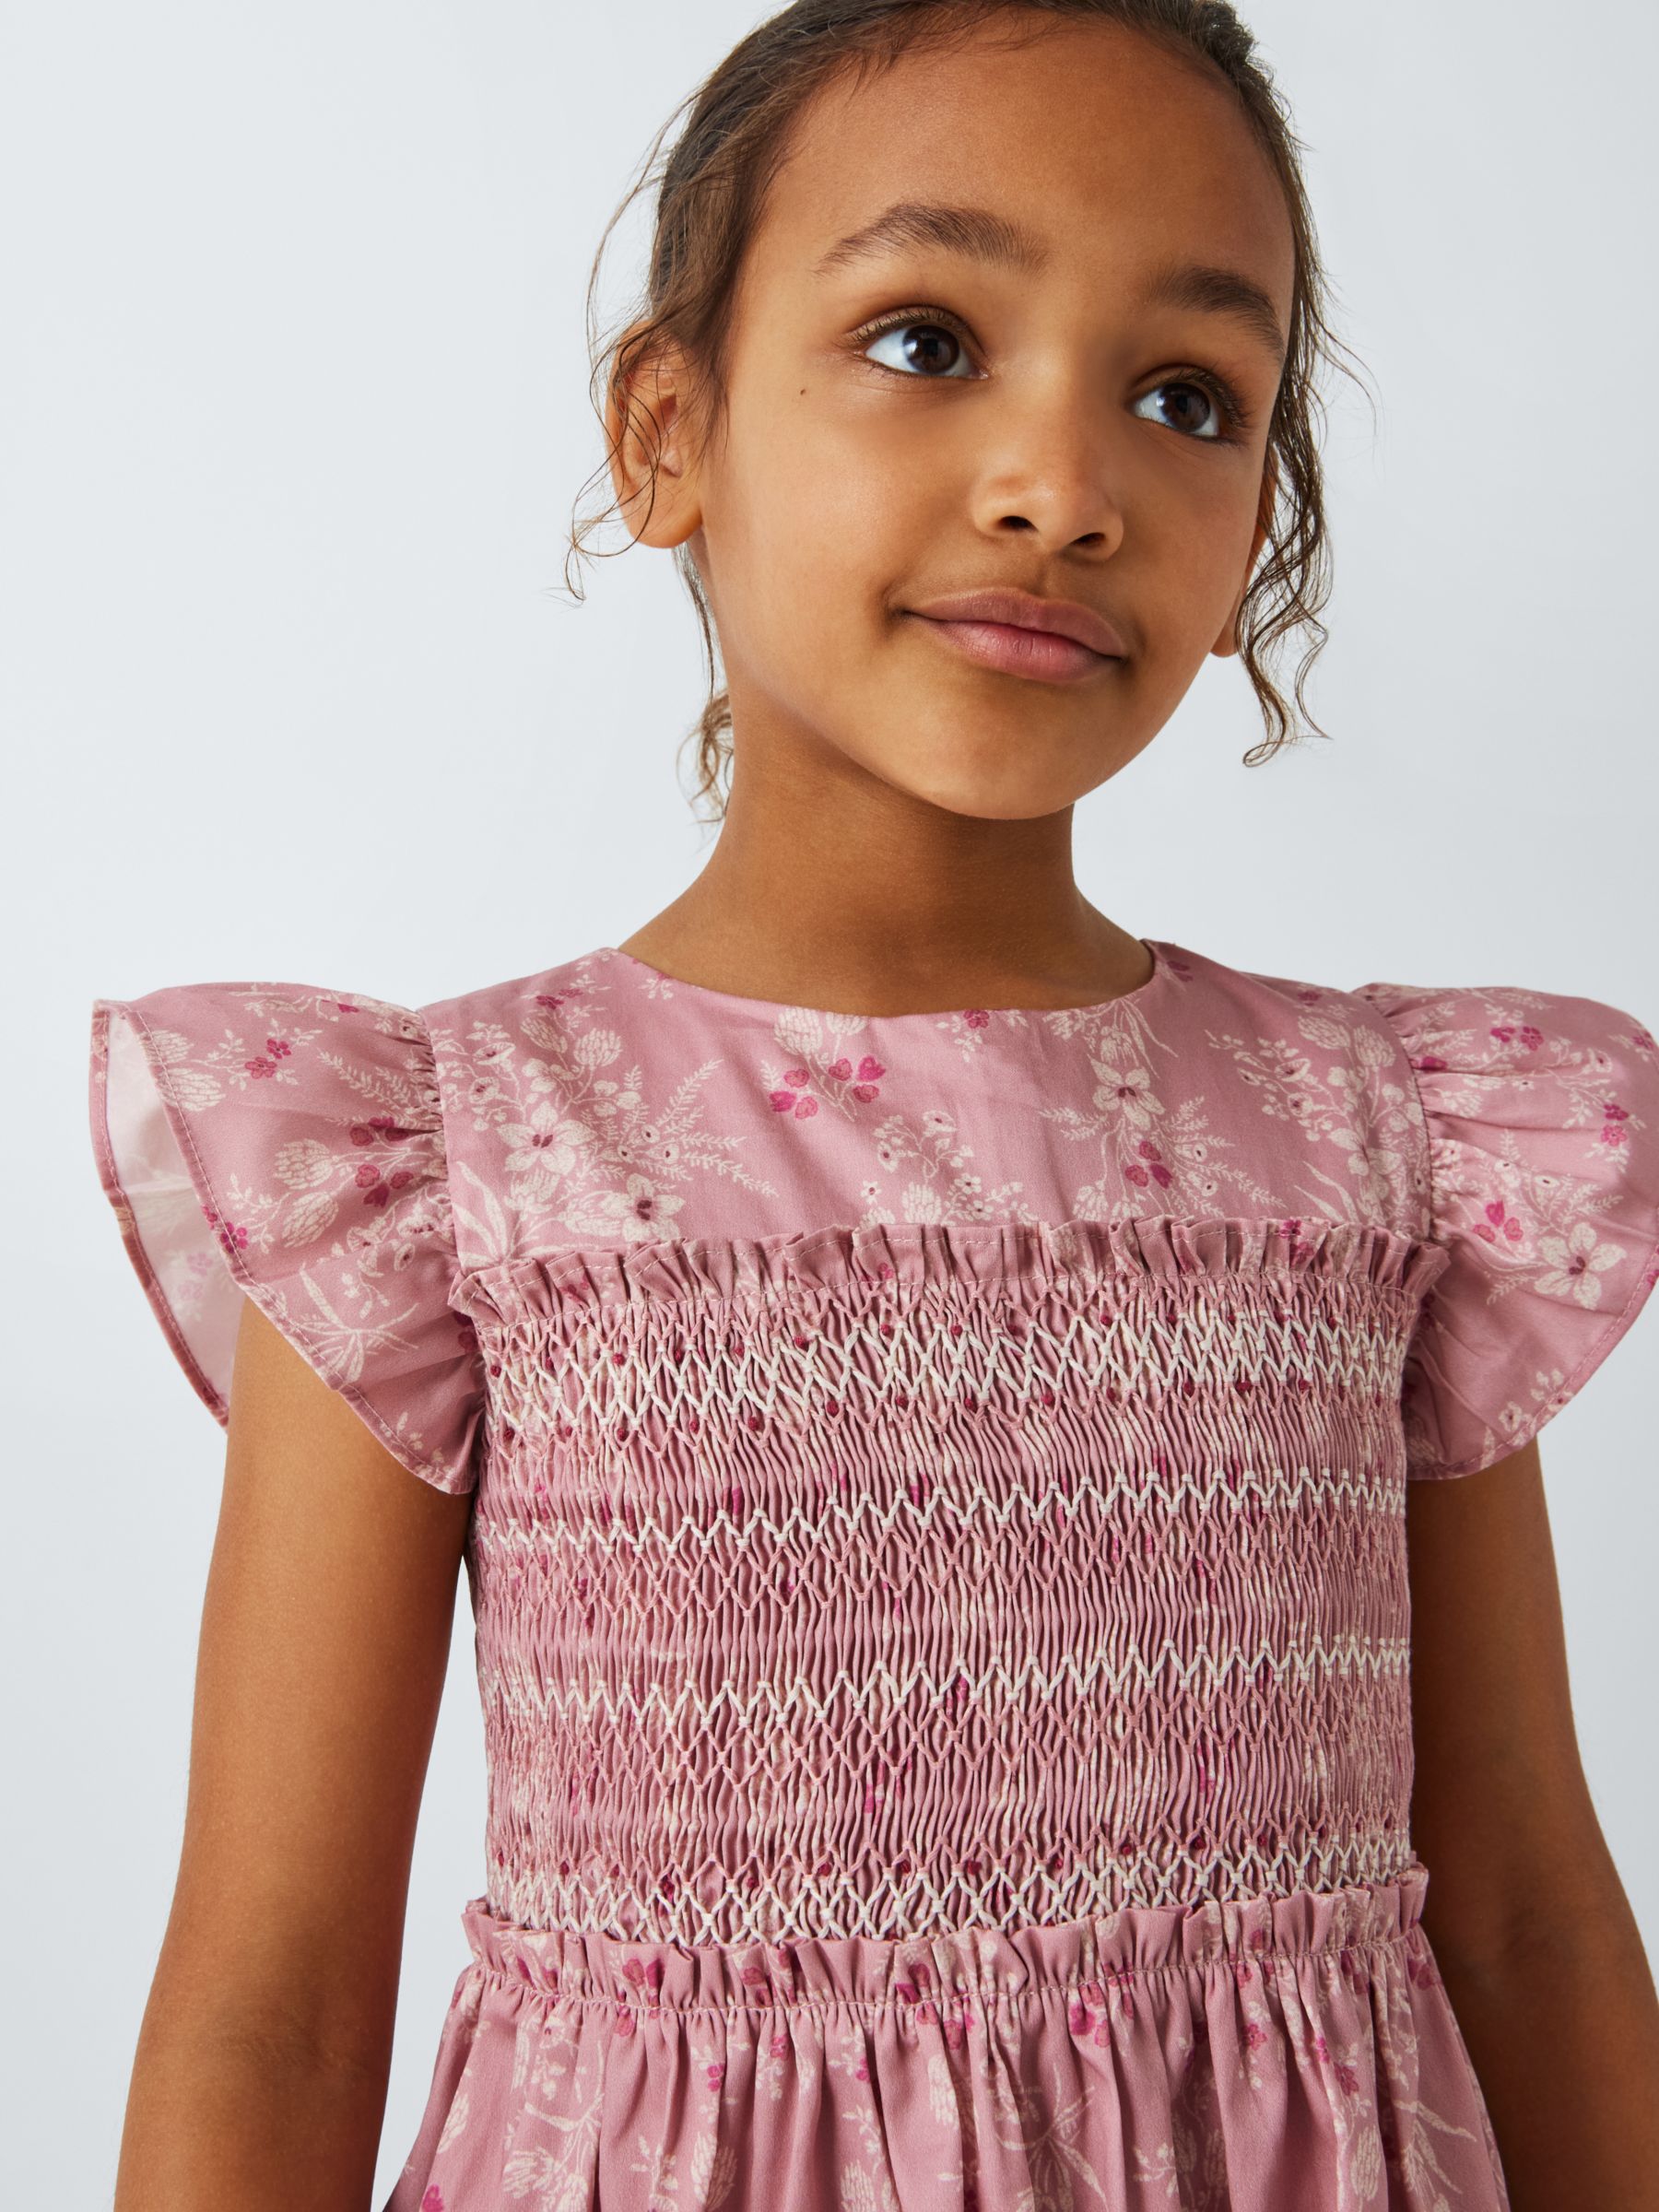 John Lewis Heirloom Collection Kids' Floral Sateen Dress, Pink, 9 years